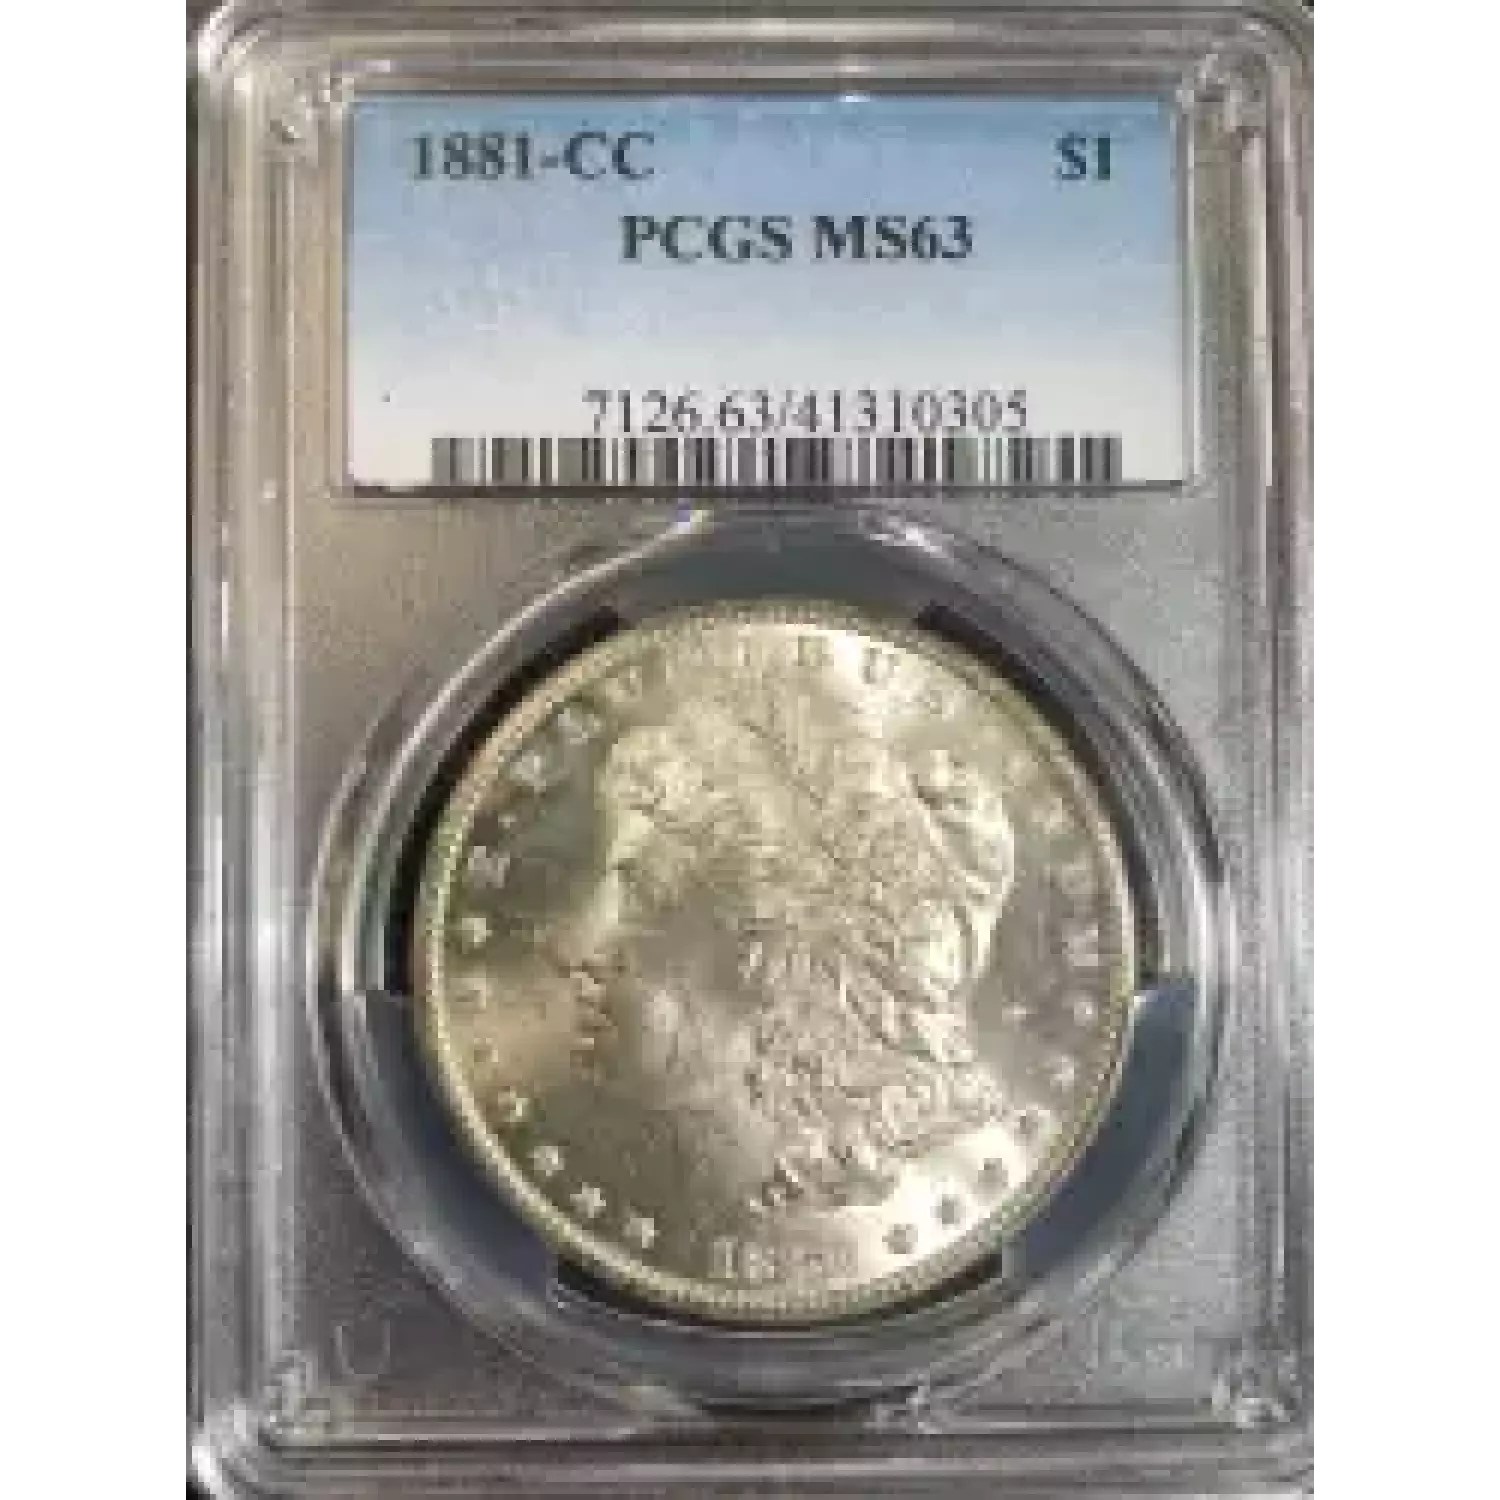 1881-CC $1 (3)